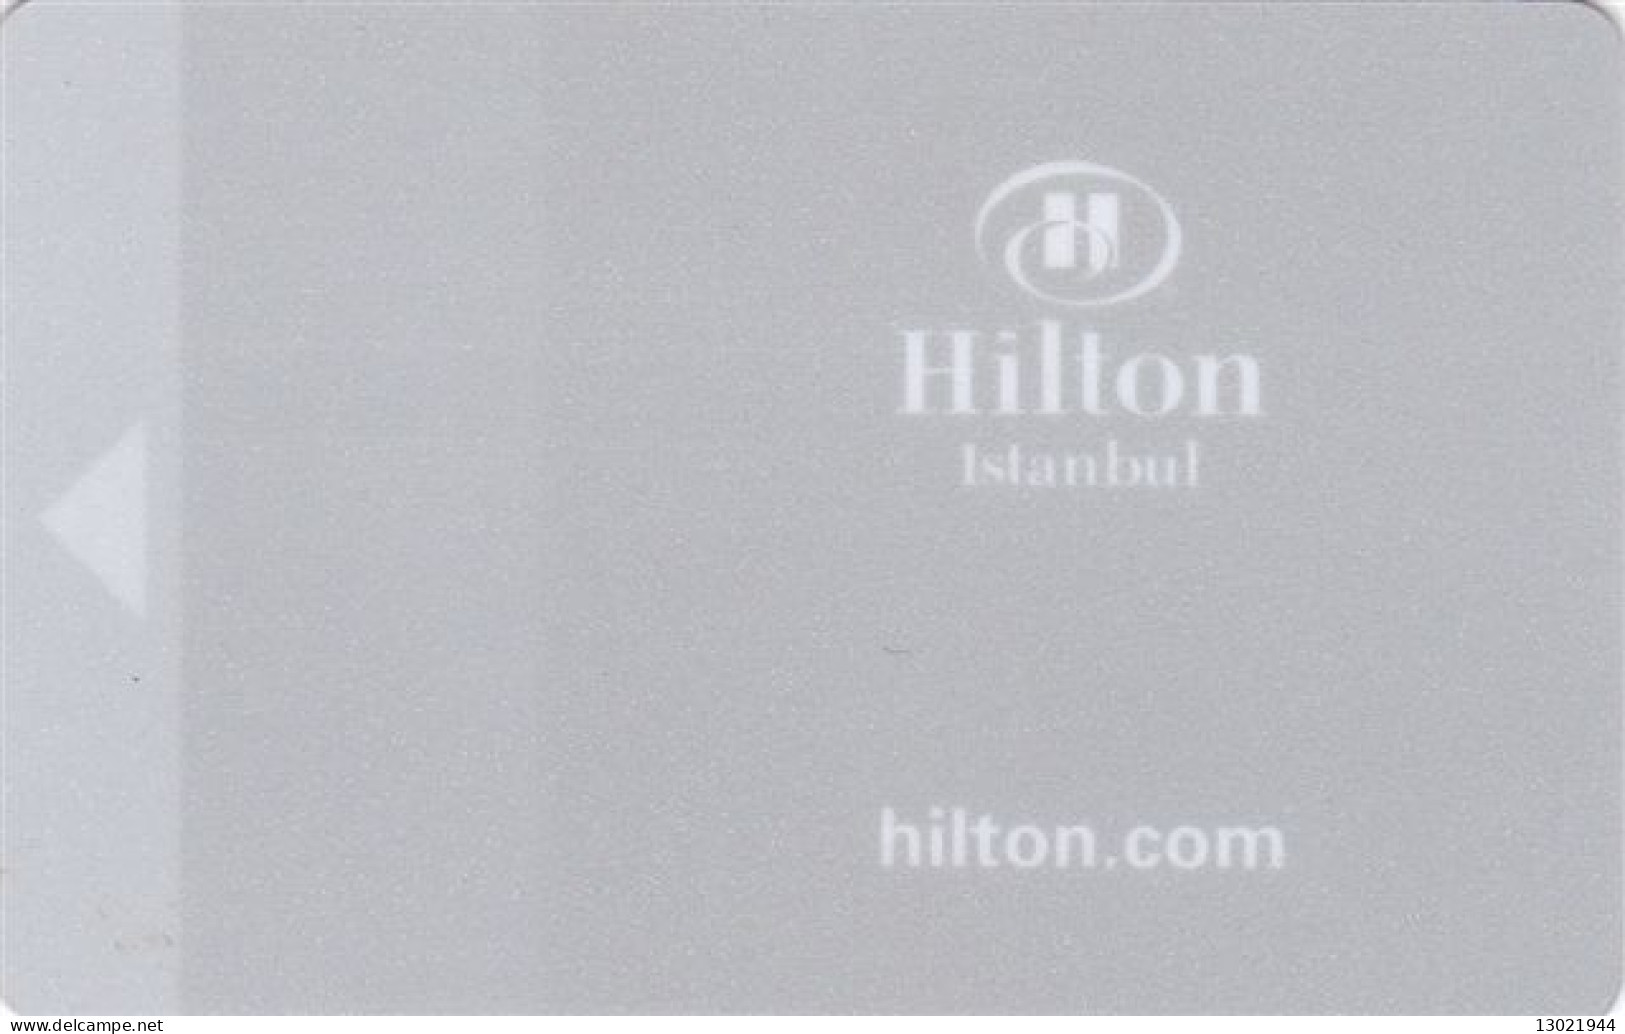 TURCHIA   KEY HOTEL  Hilton Istanbul 3 - Cartes D'hotel